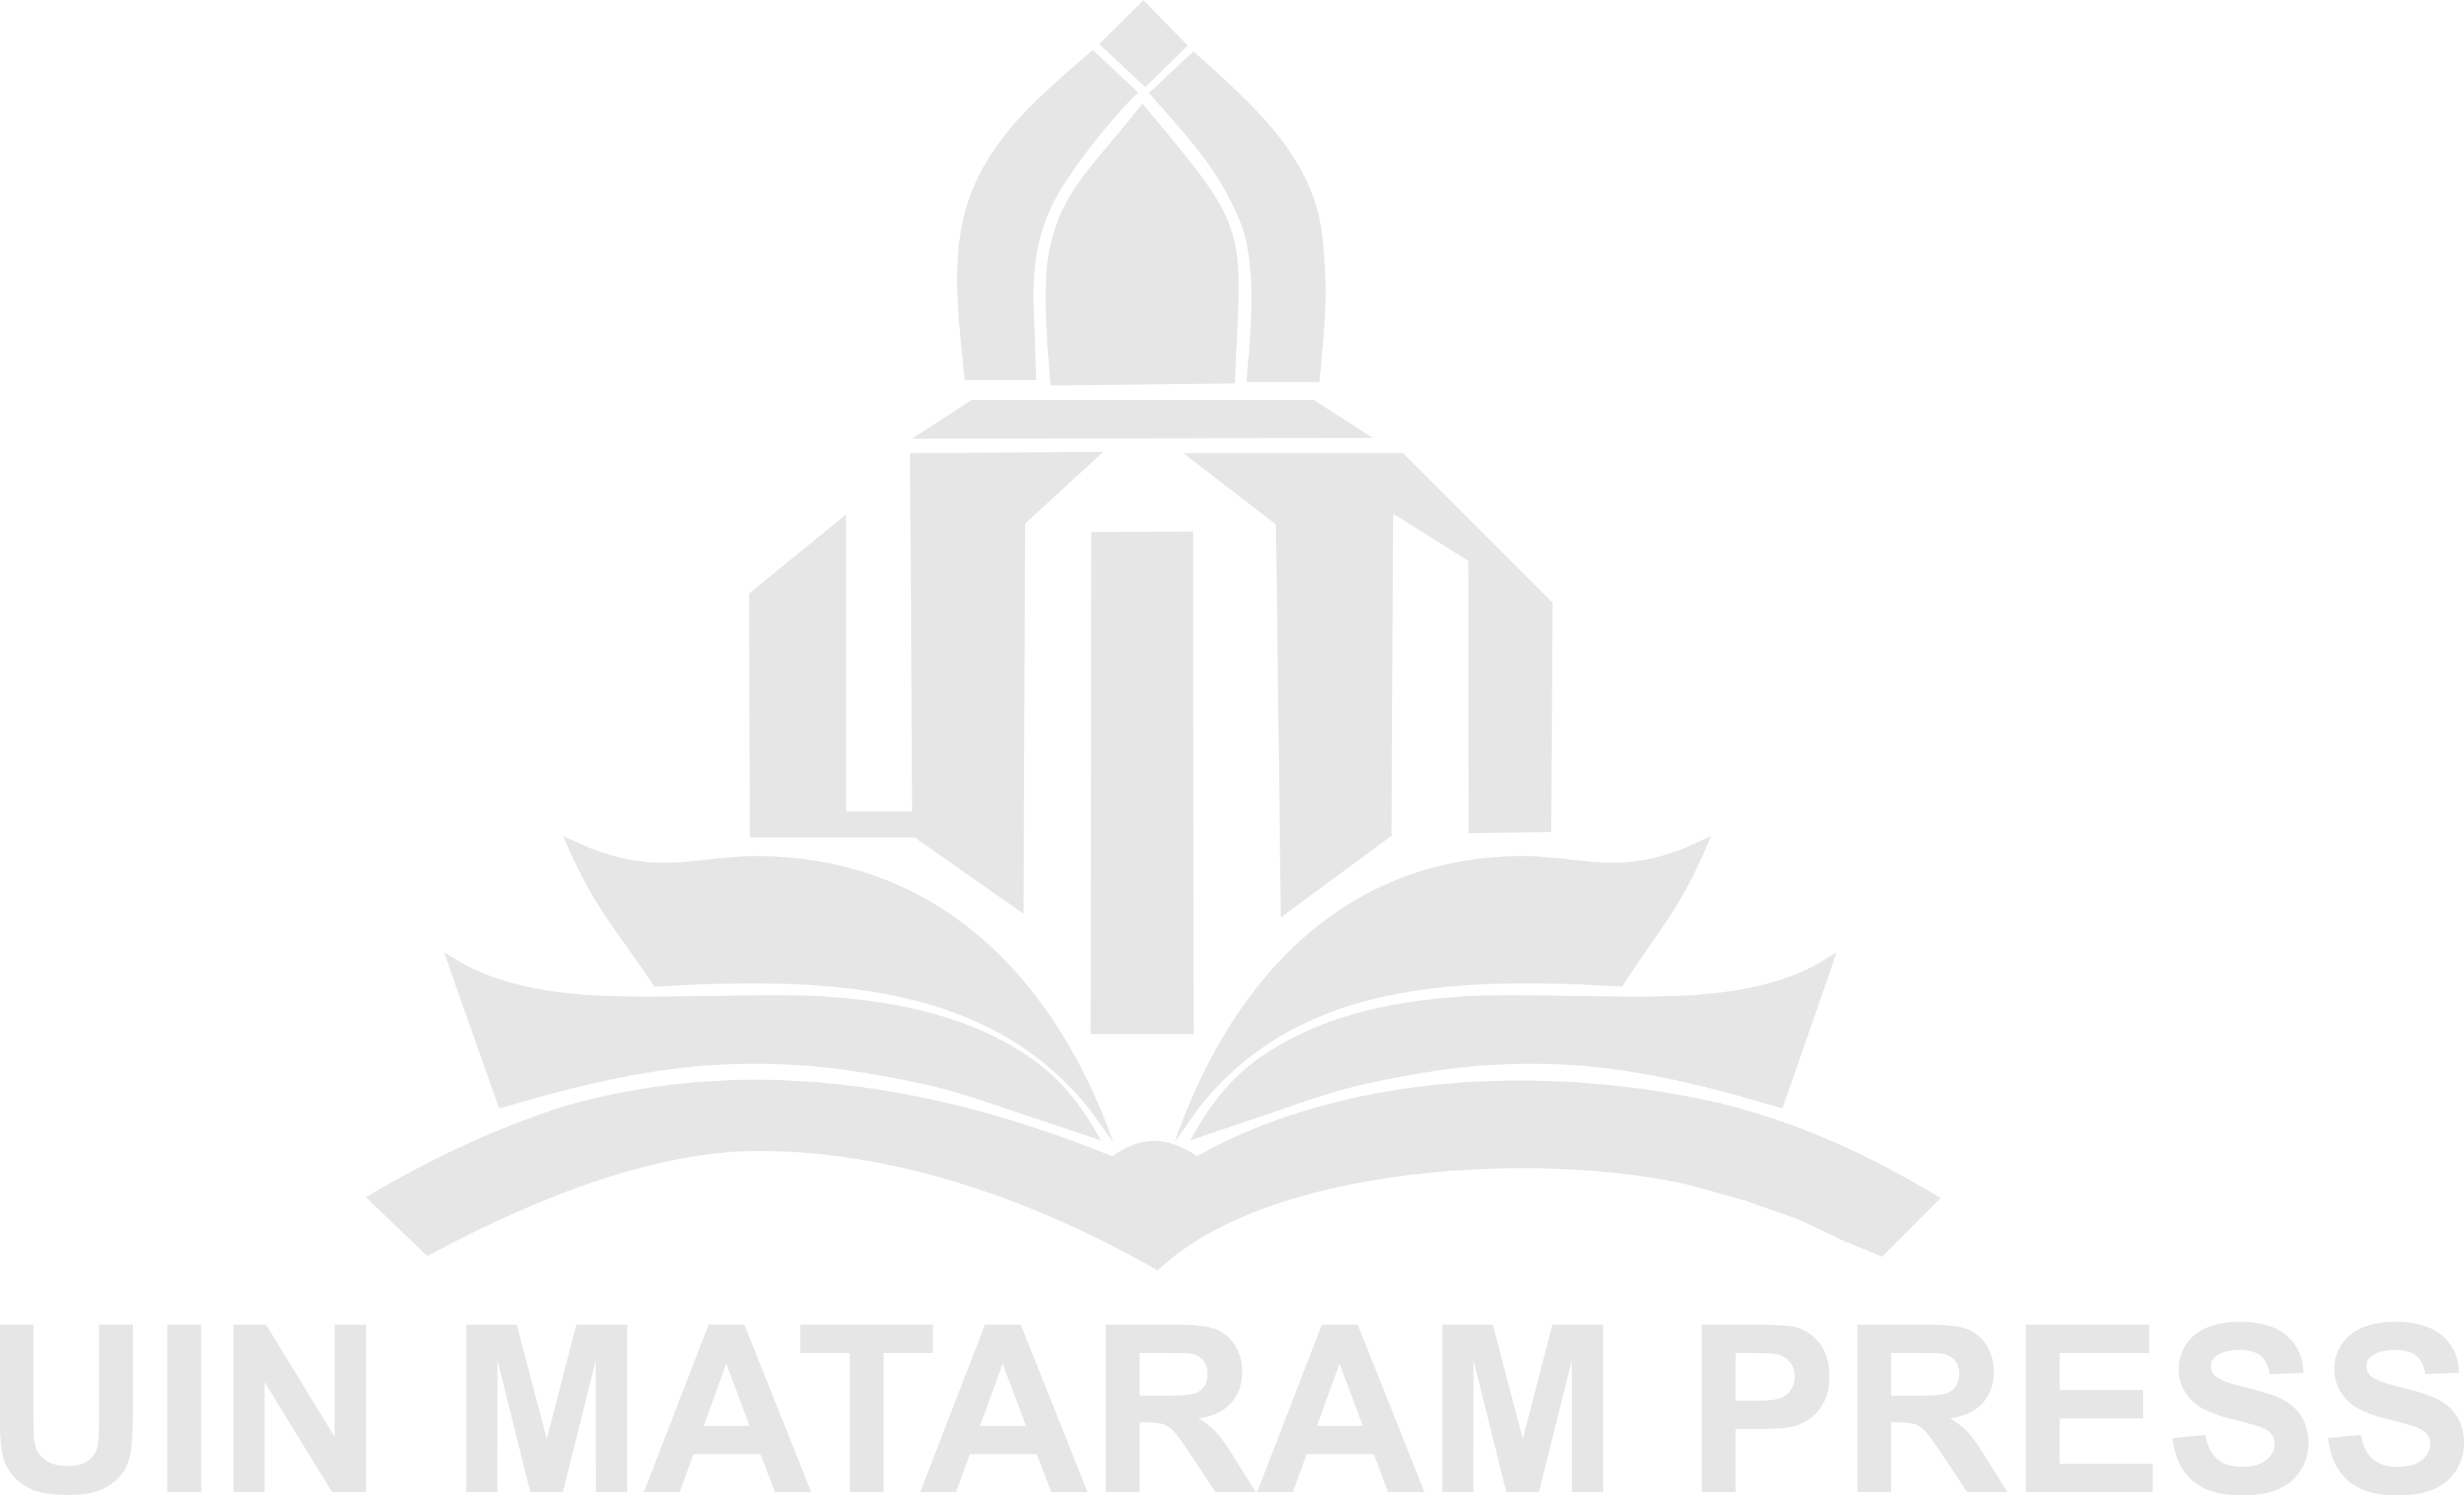 Press UIN Mataram